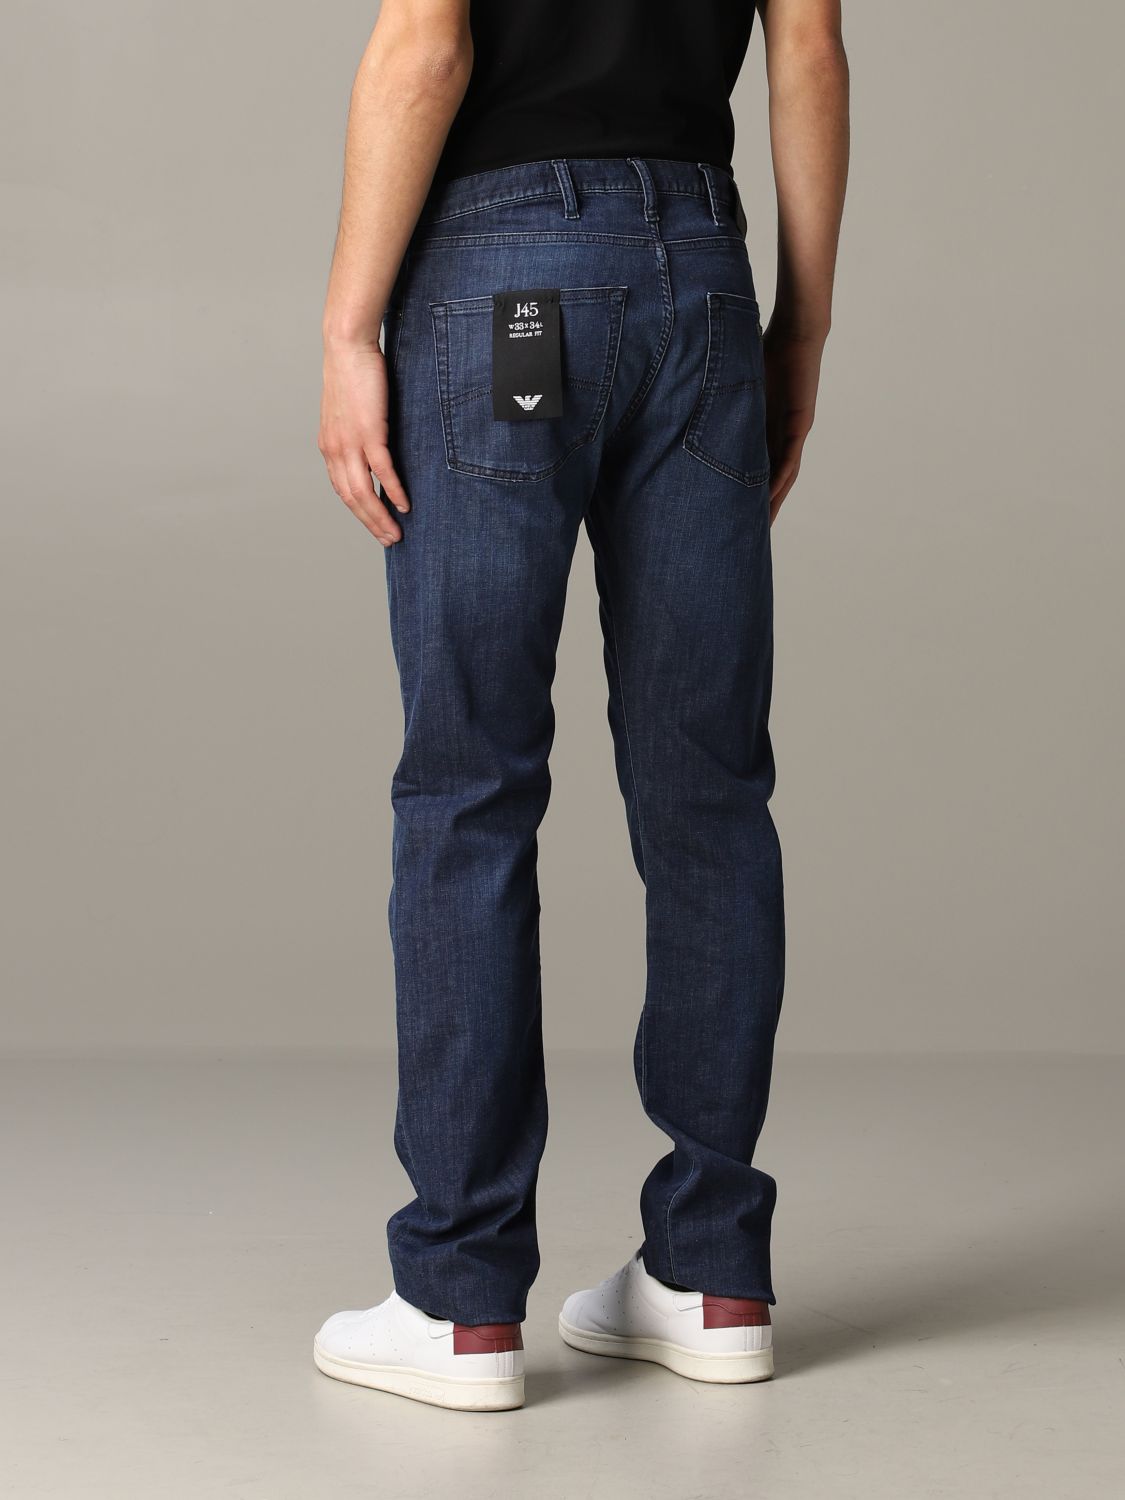 Emporio Armani fit jeans 8 oz - Blue | Emporio Armani jeans 3H1J45 1D5PZ online at GIGLIO.COM